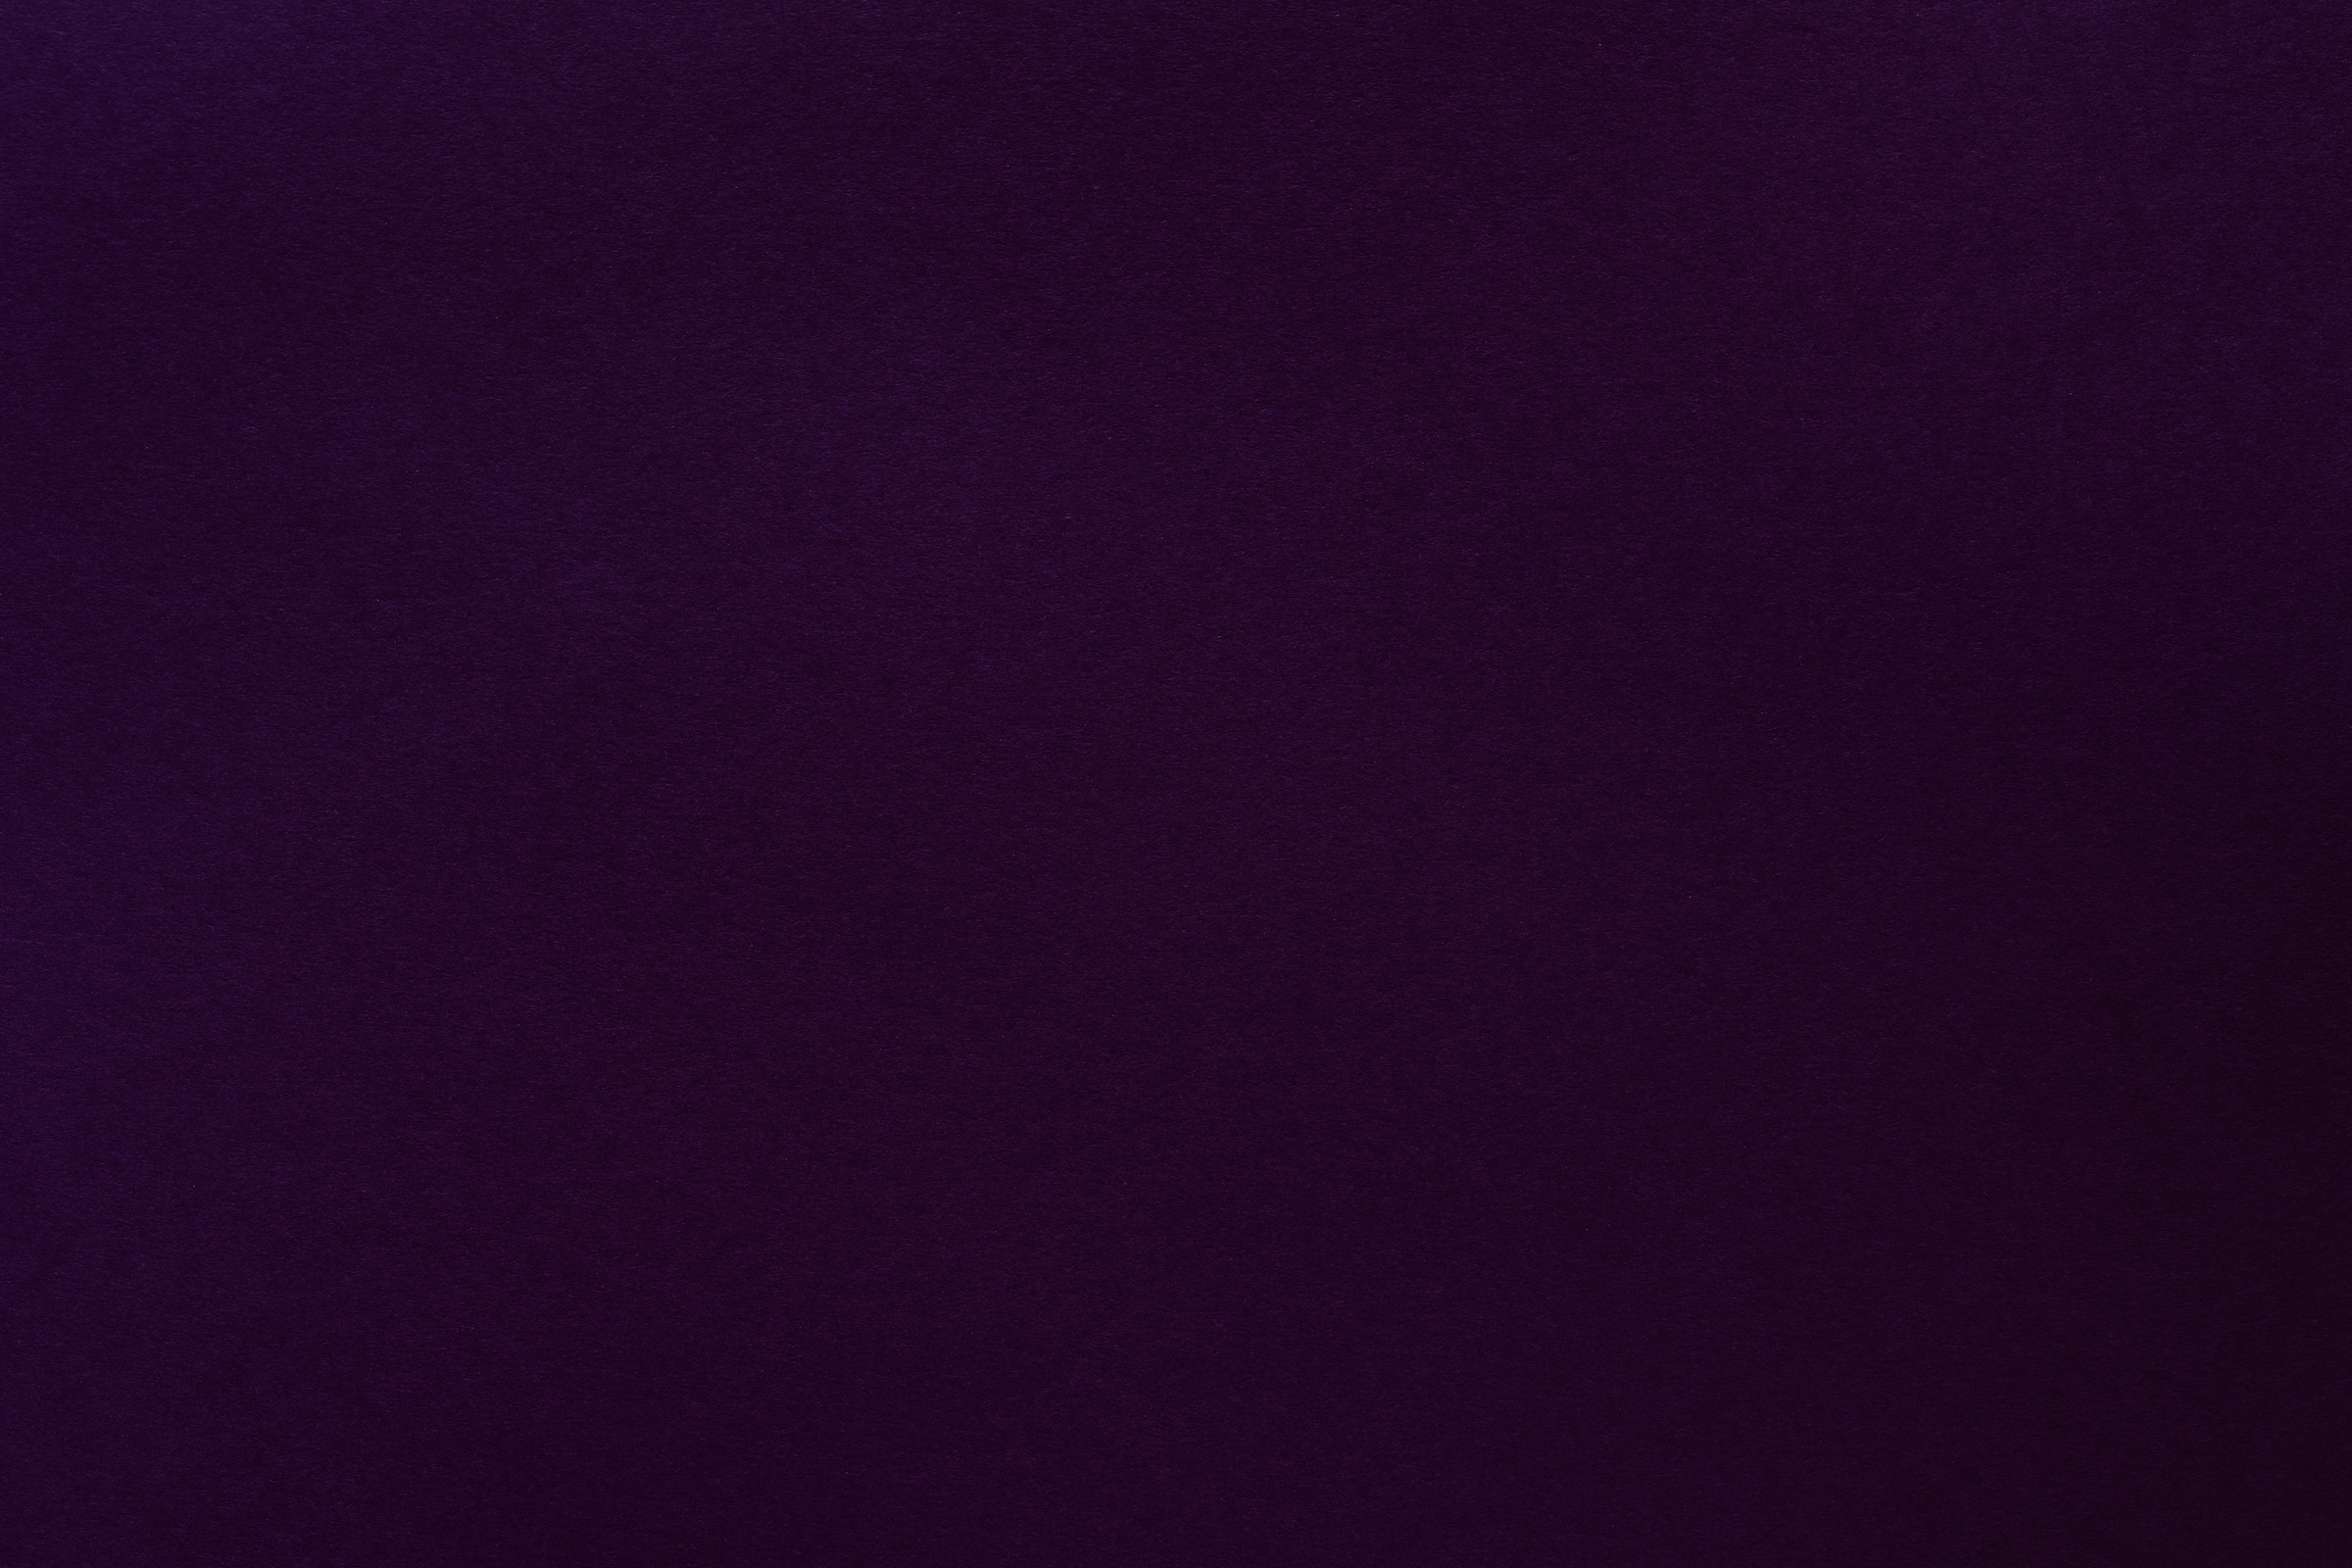 dark purple felt texture abstract background